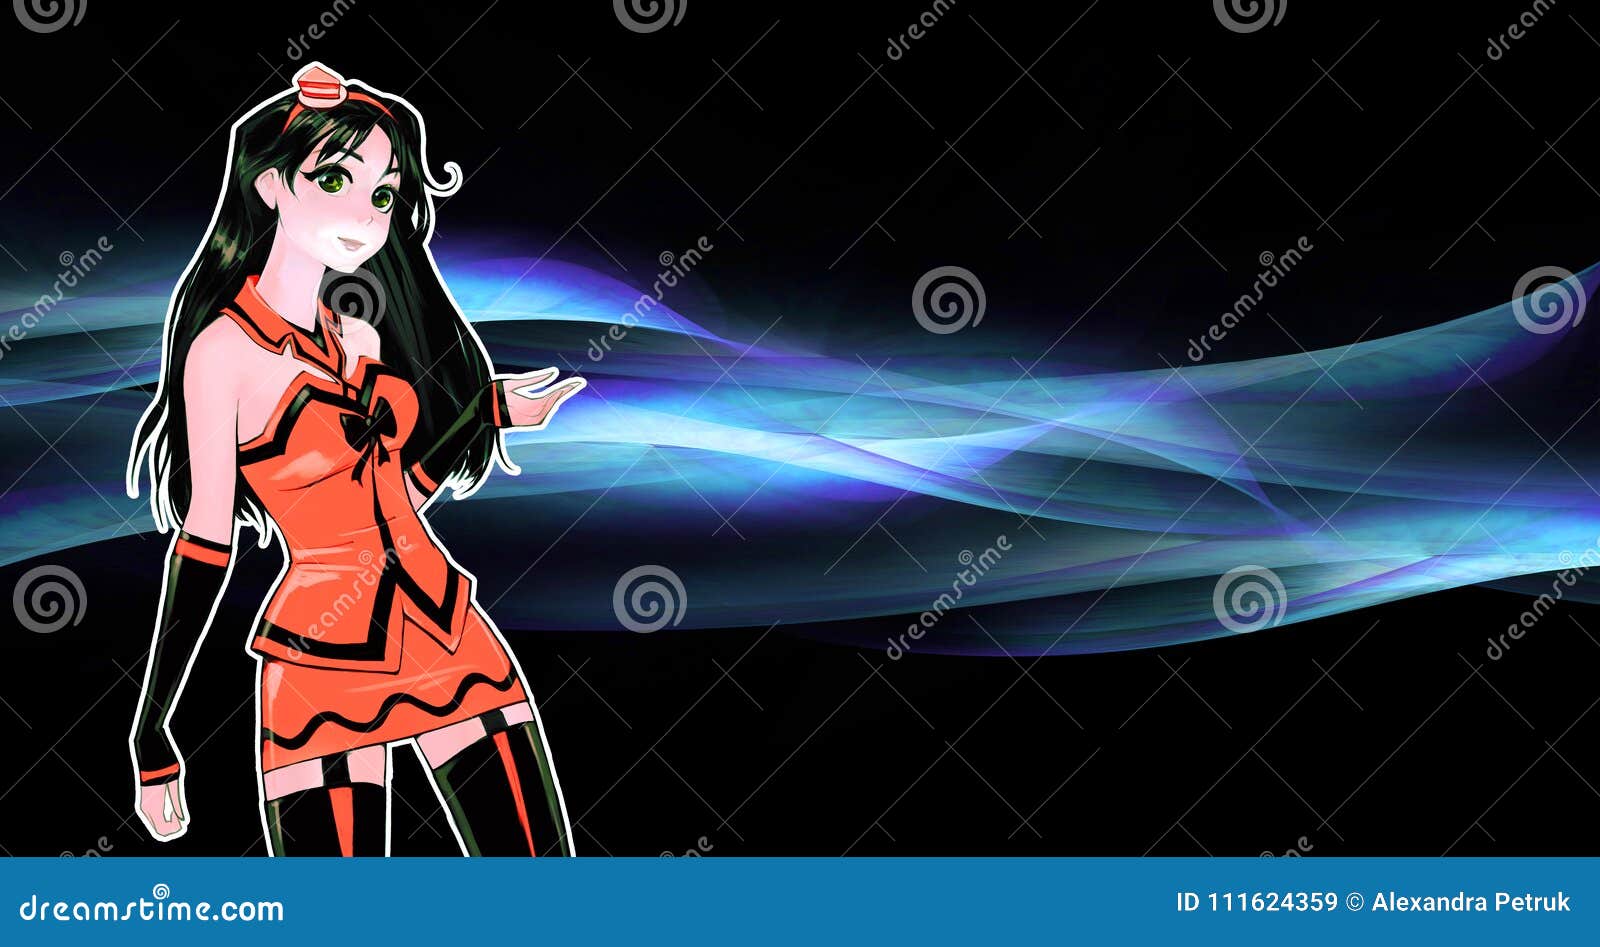 Cute Anime Cartoon Female Chatacter With Long Dark Hair